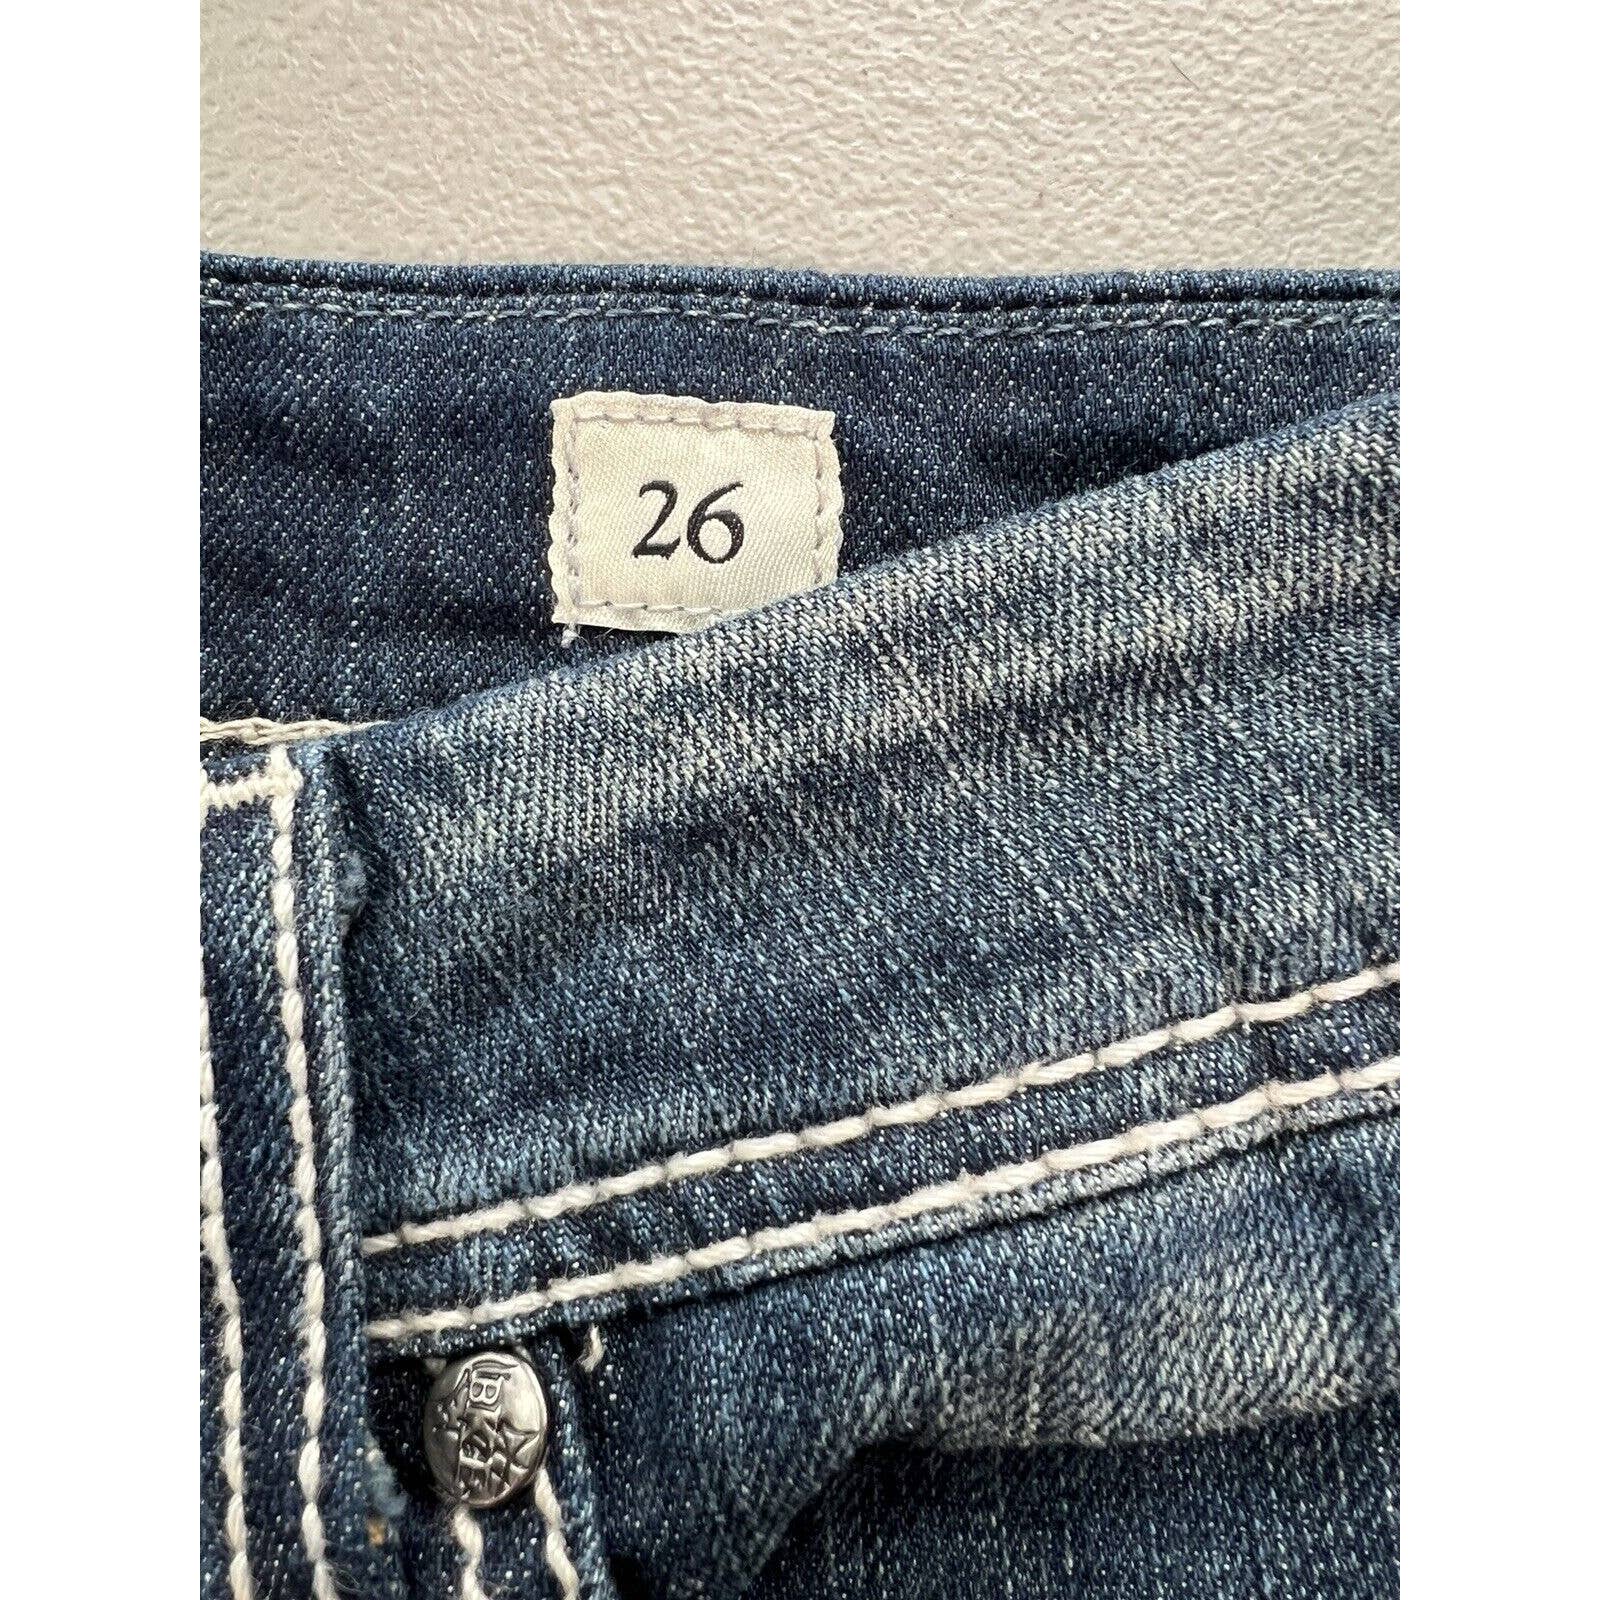 BKE Buckle Payton Cropped Jeans Womens 26 Stretch Low Rise Rhinestone Blue Denim